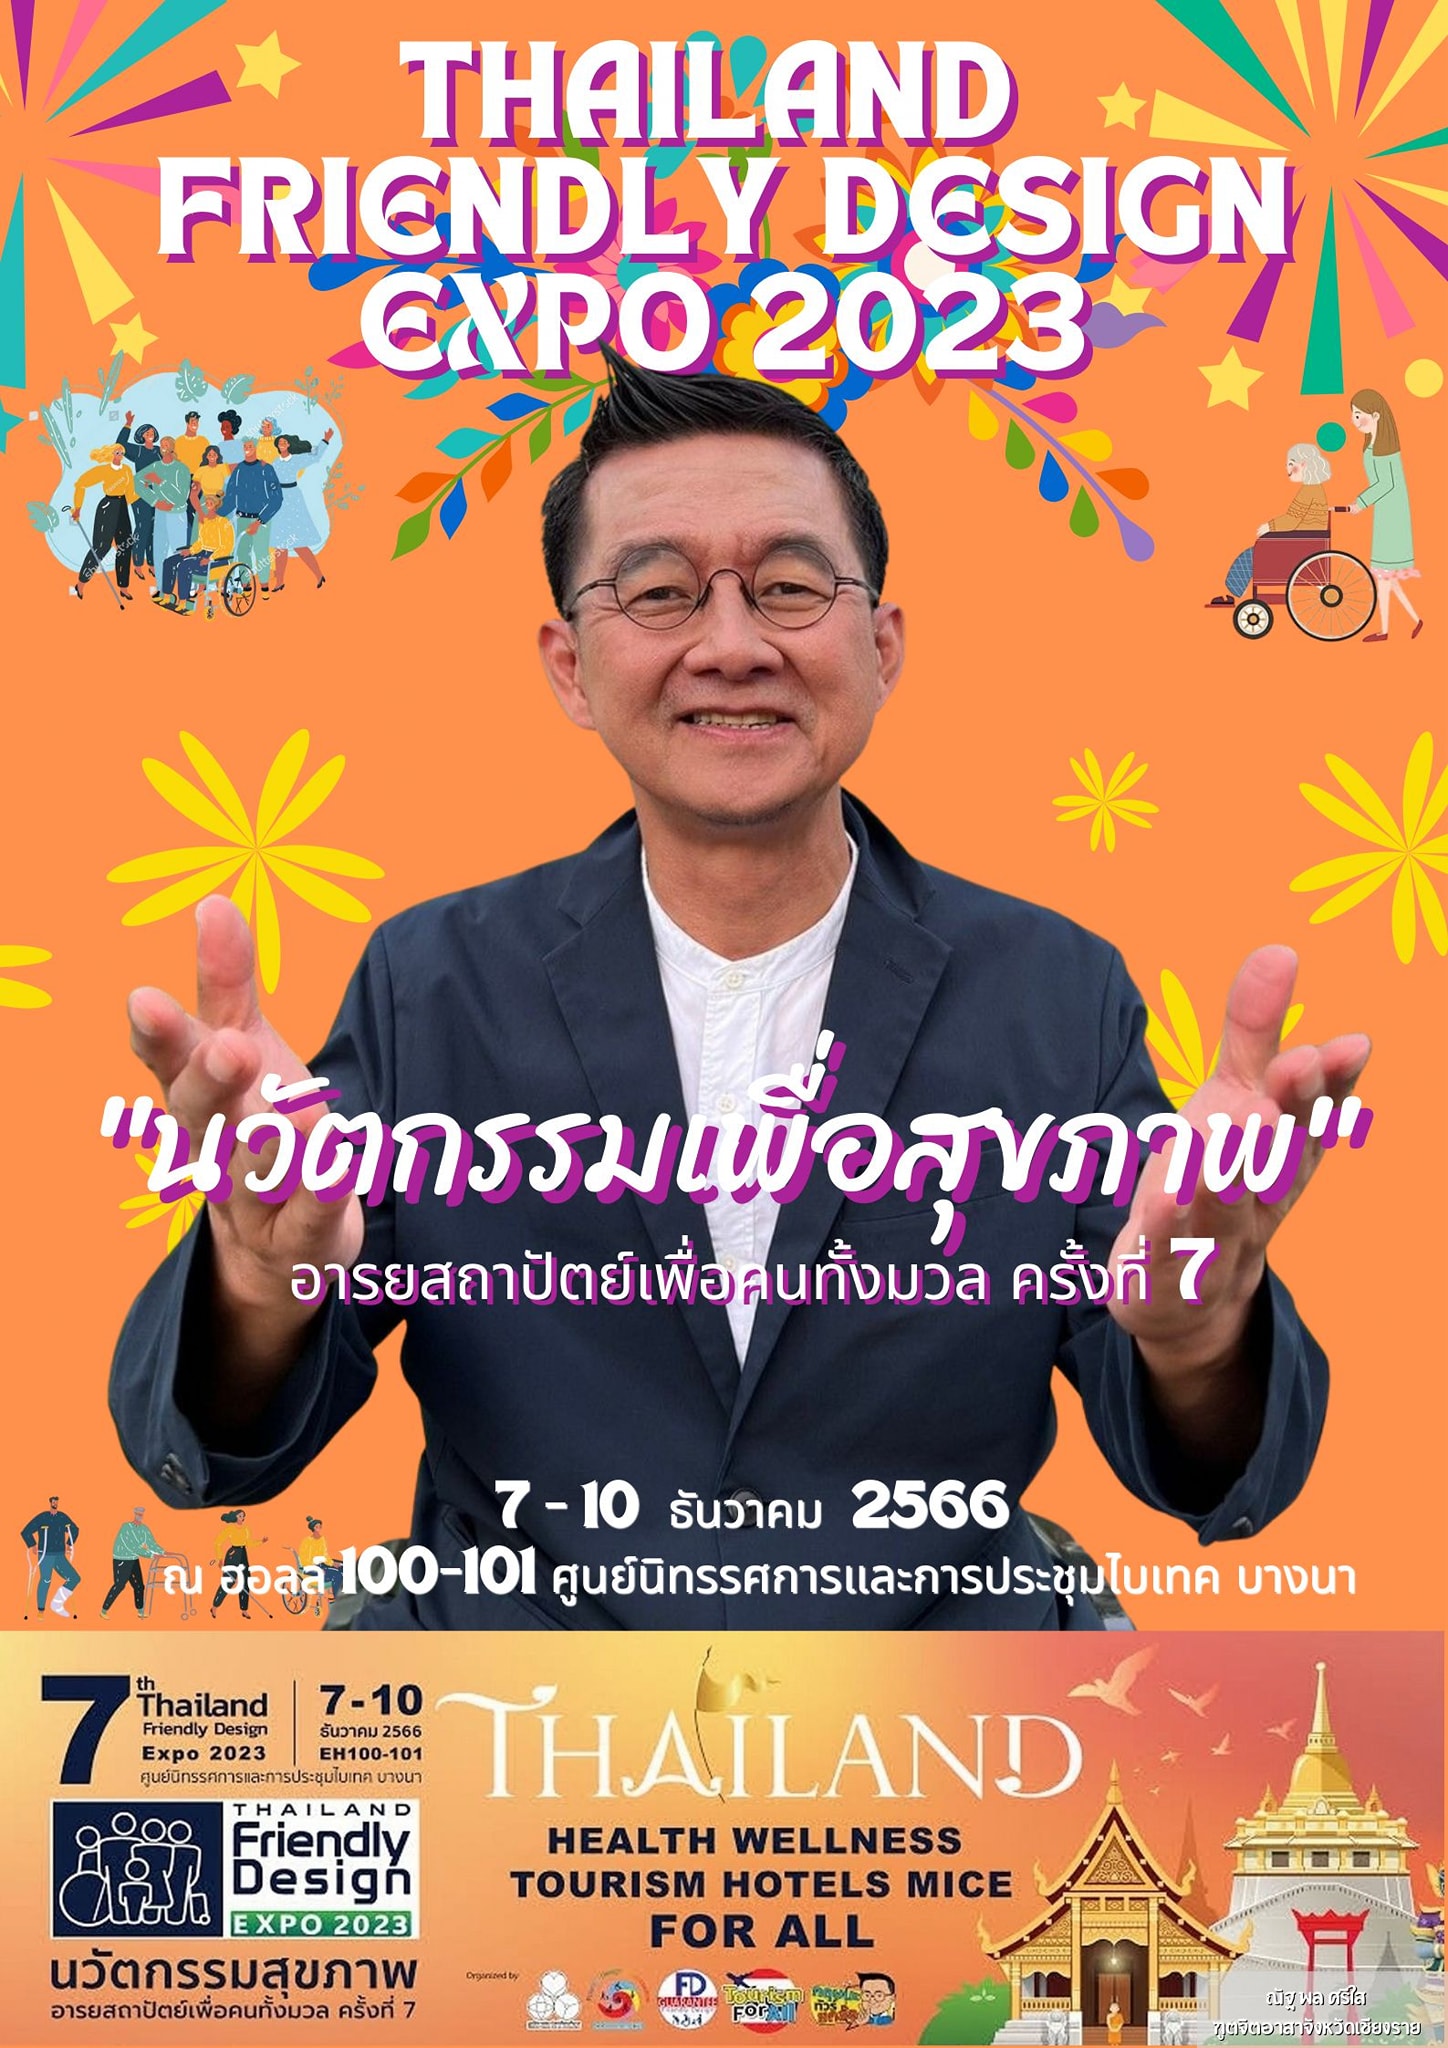 Thailand Friendly Design Expo 2023